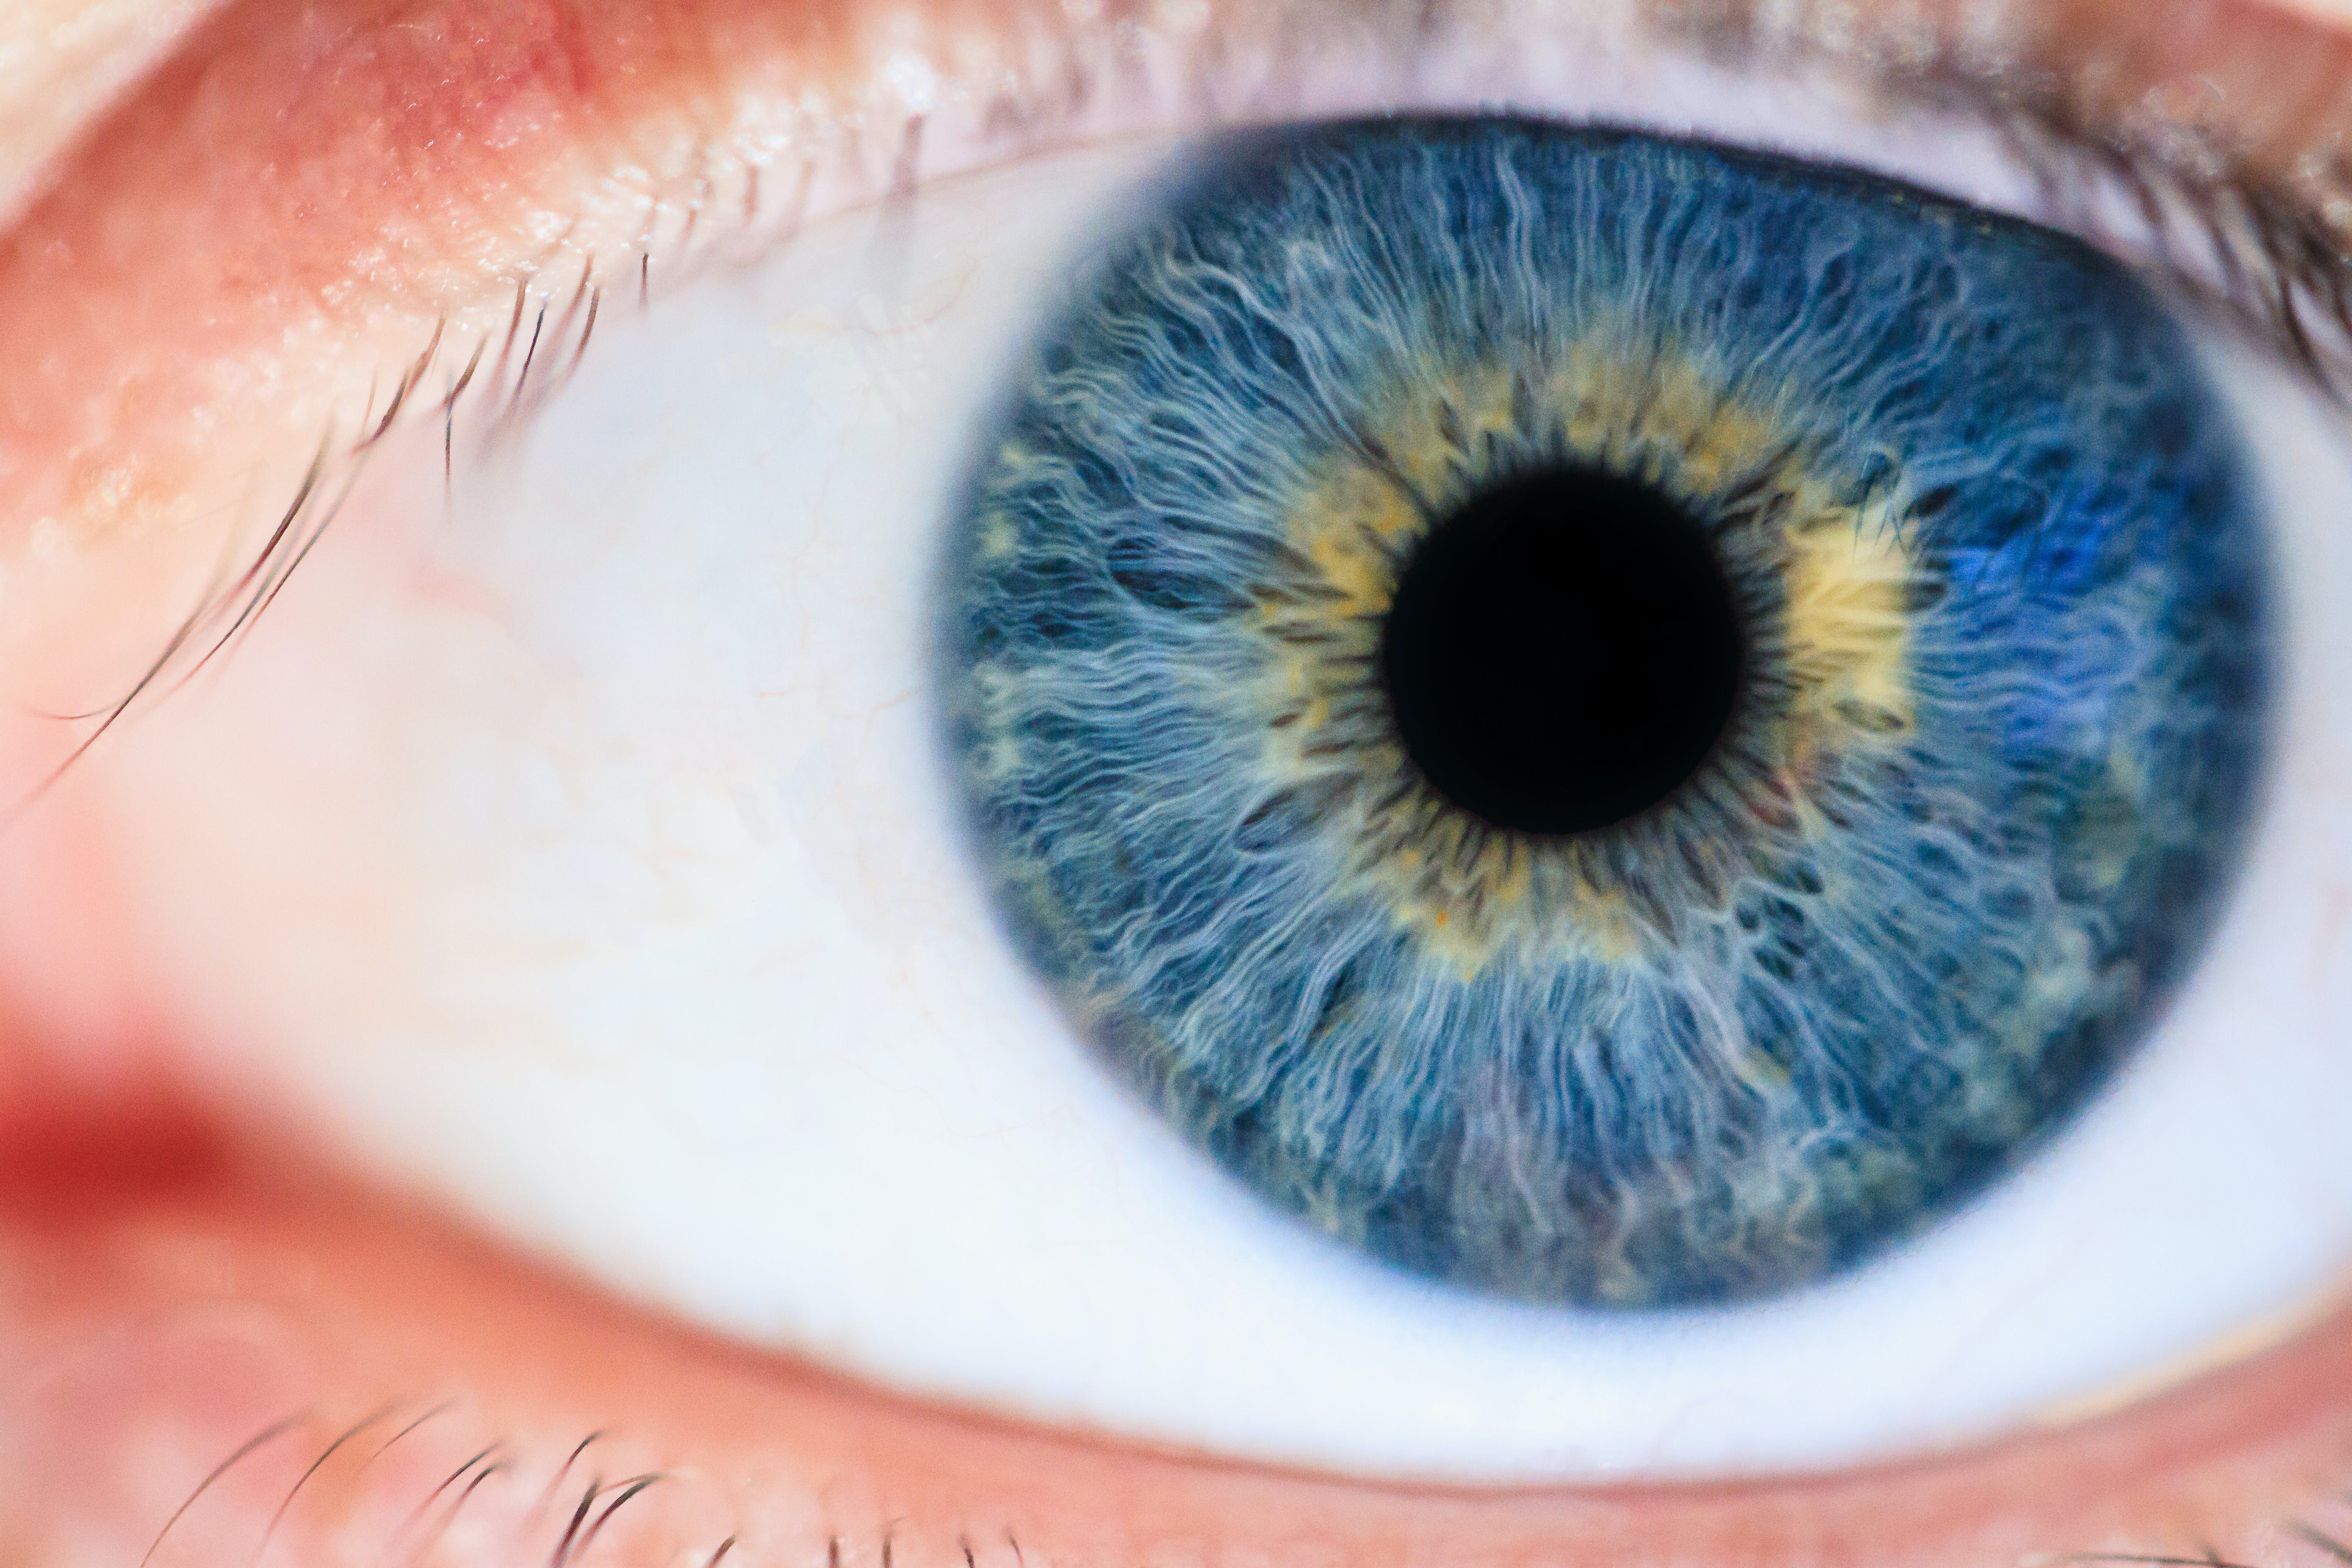 A close-up of a blue eye